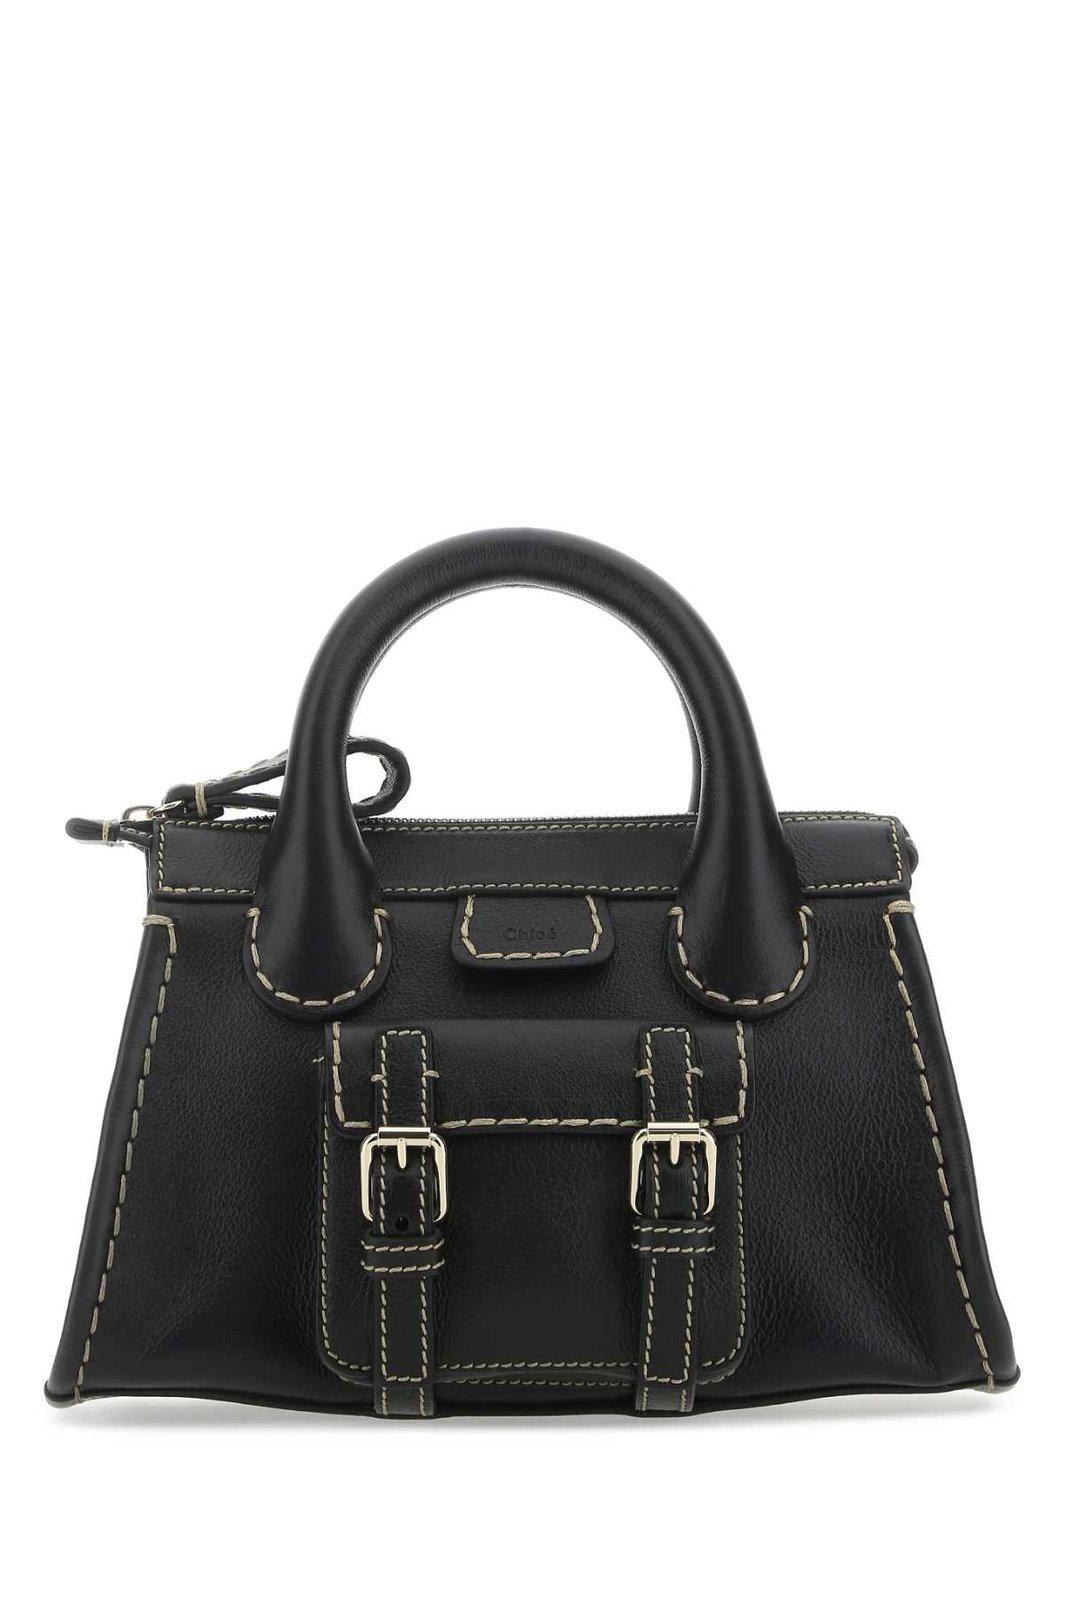 Chloé Edith Medium Top Handle Bag